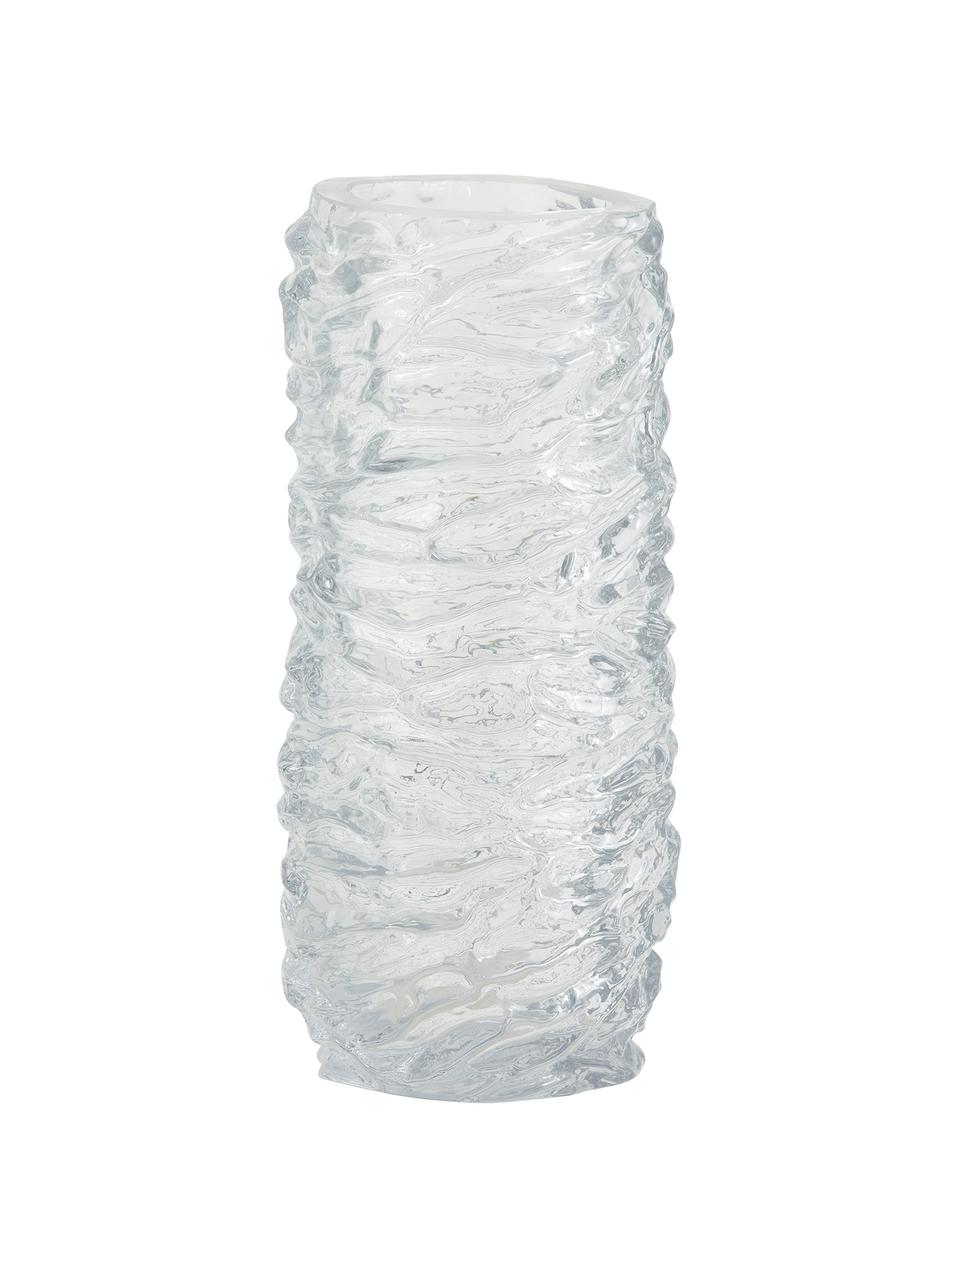 Hoge glazen vaas Maio met gestructureerde oppervlak, Glas, Transparant, Ø 12 x H 28 cm